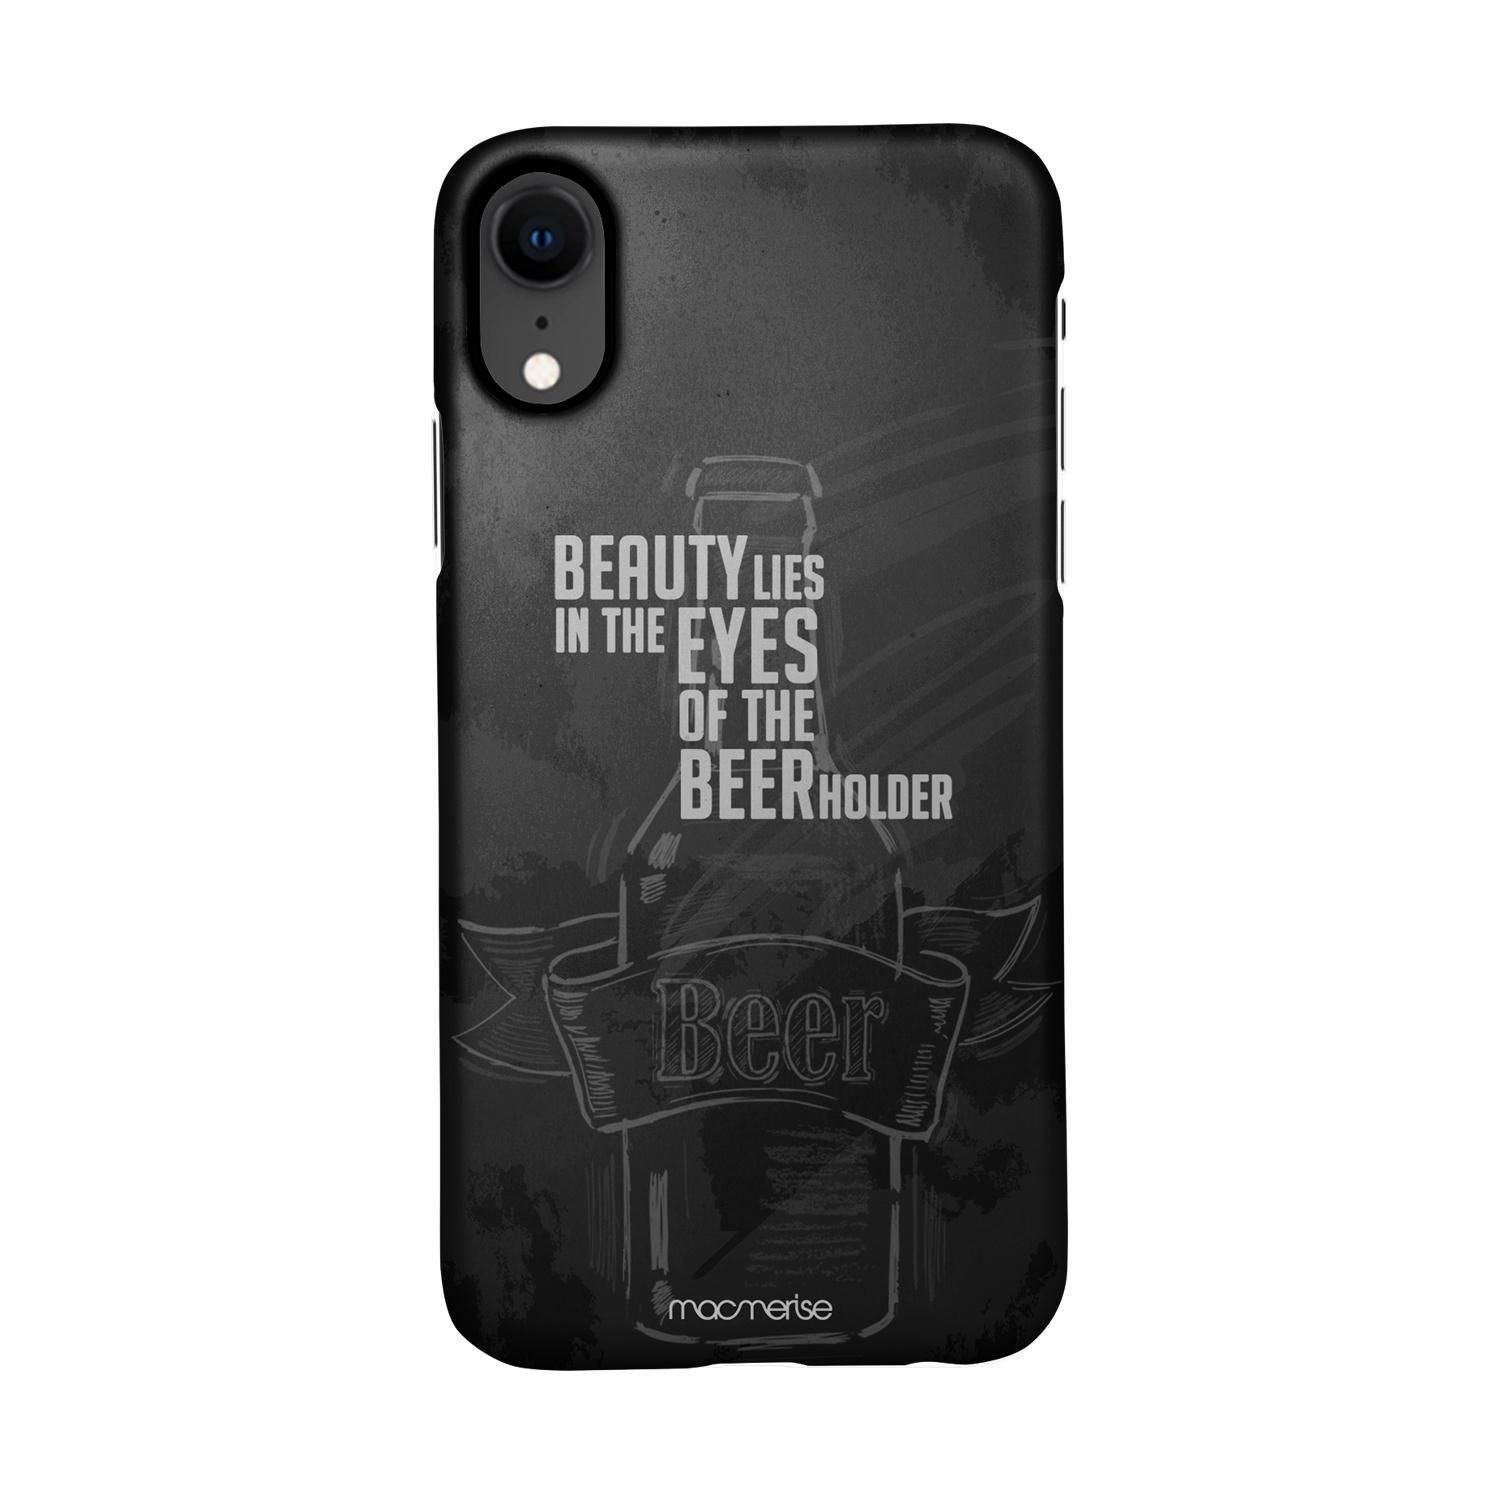 Buy Beer Holder - Sleek Phone Case for iPhone XR Online